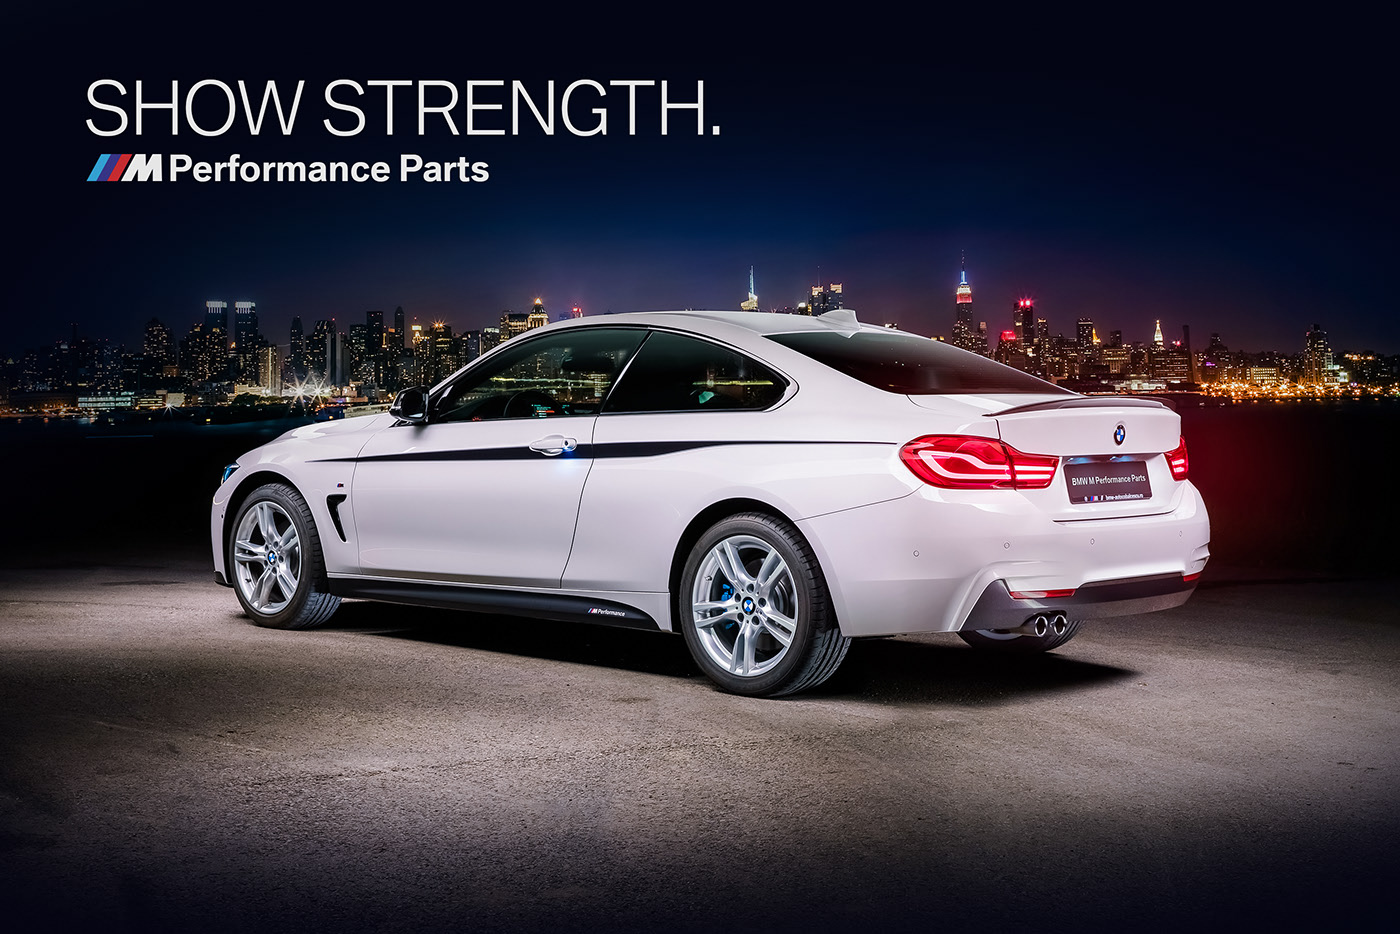 BMW Performance Parts